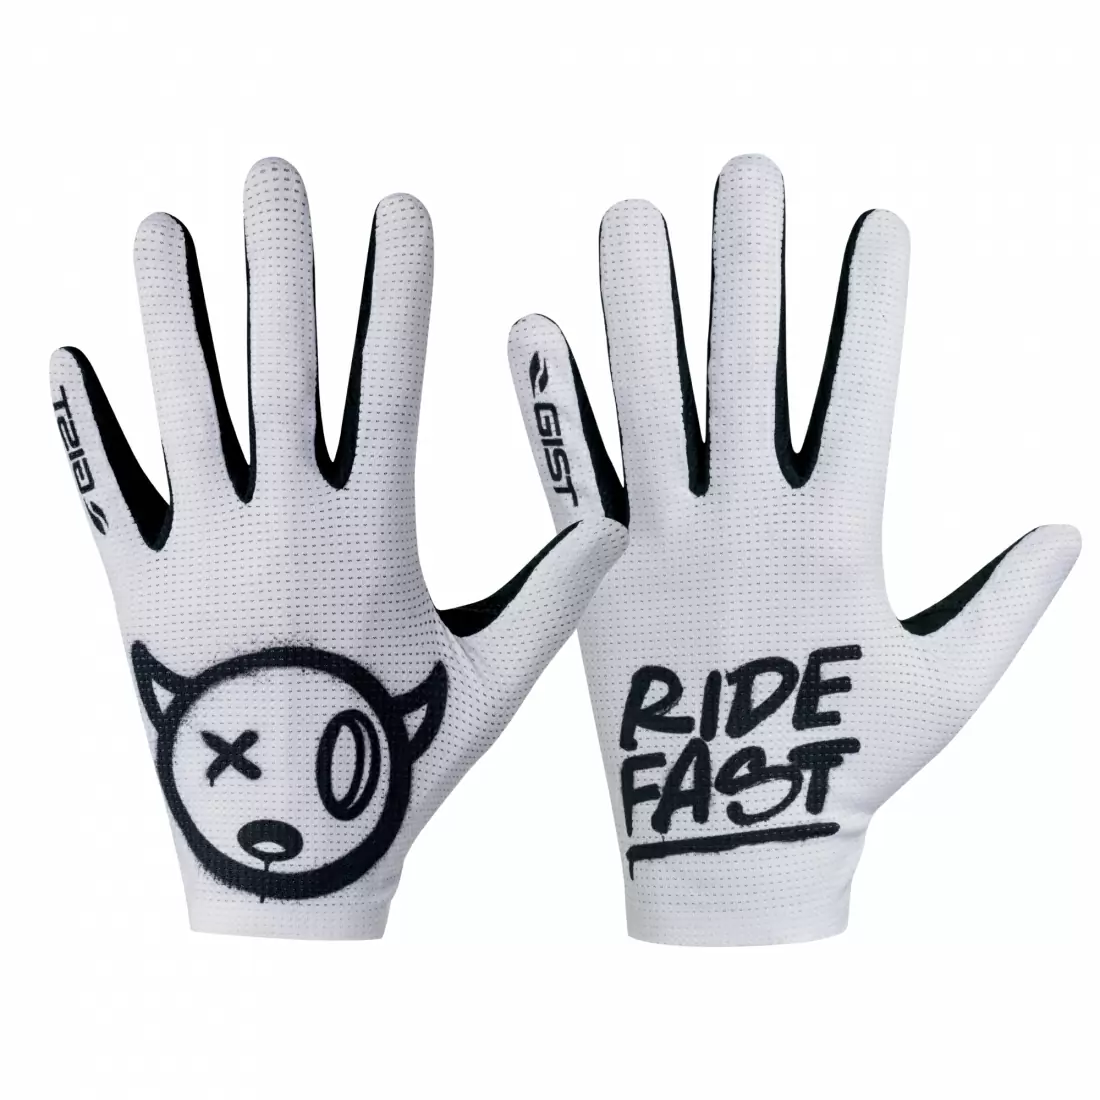 Faster Gloves White Size S - image